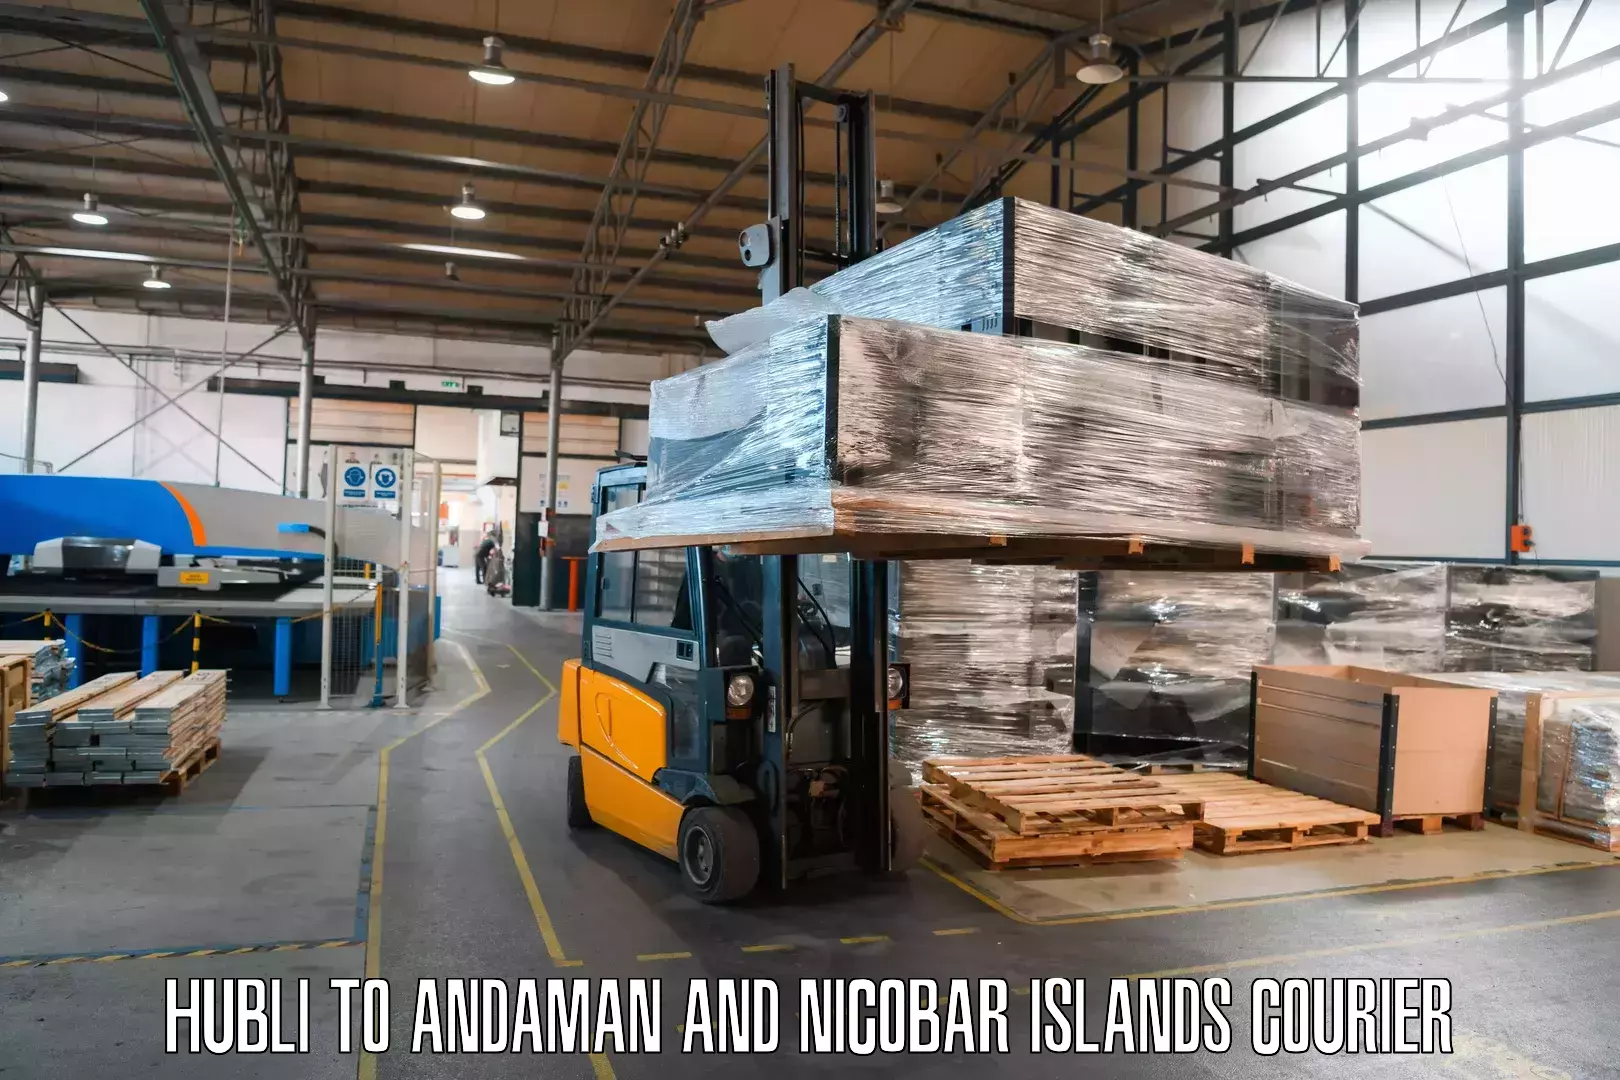 Global logistics network Hubli to Nicobar